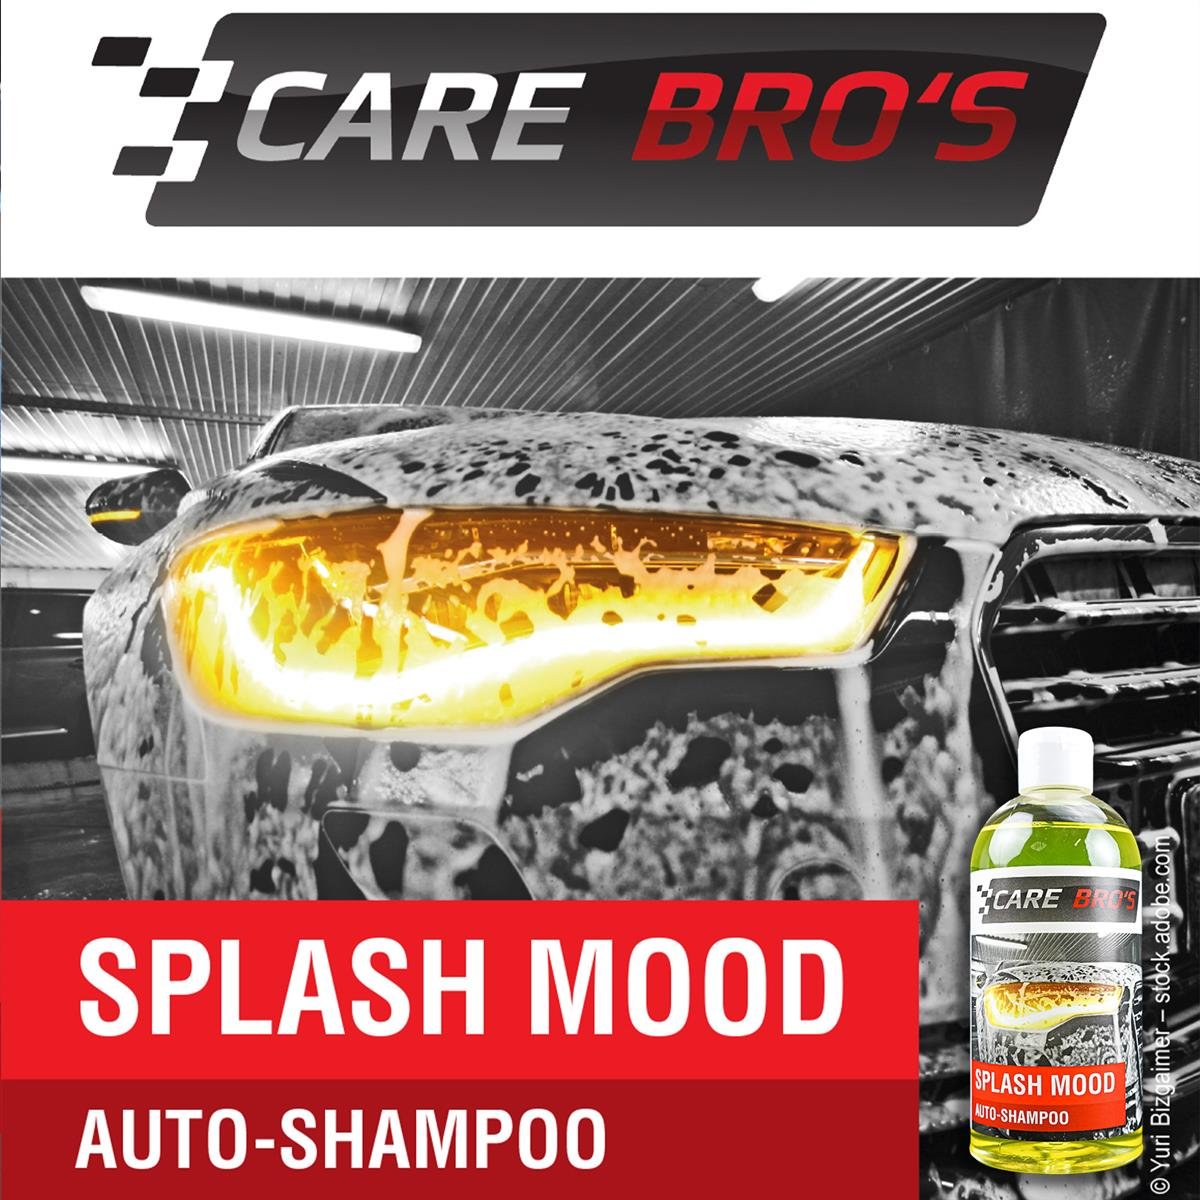 Splash-Mood-Auto-Shampoo-Care-Bros-01